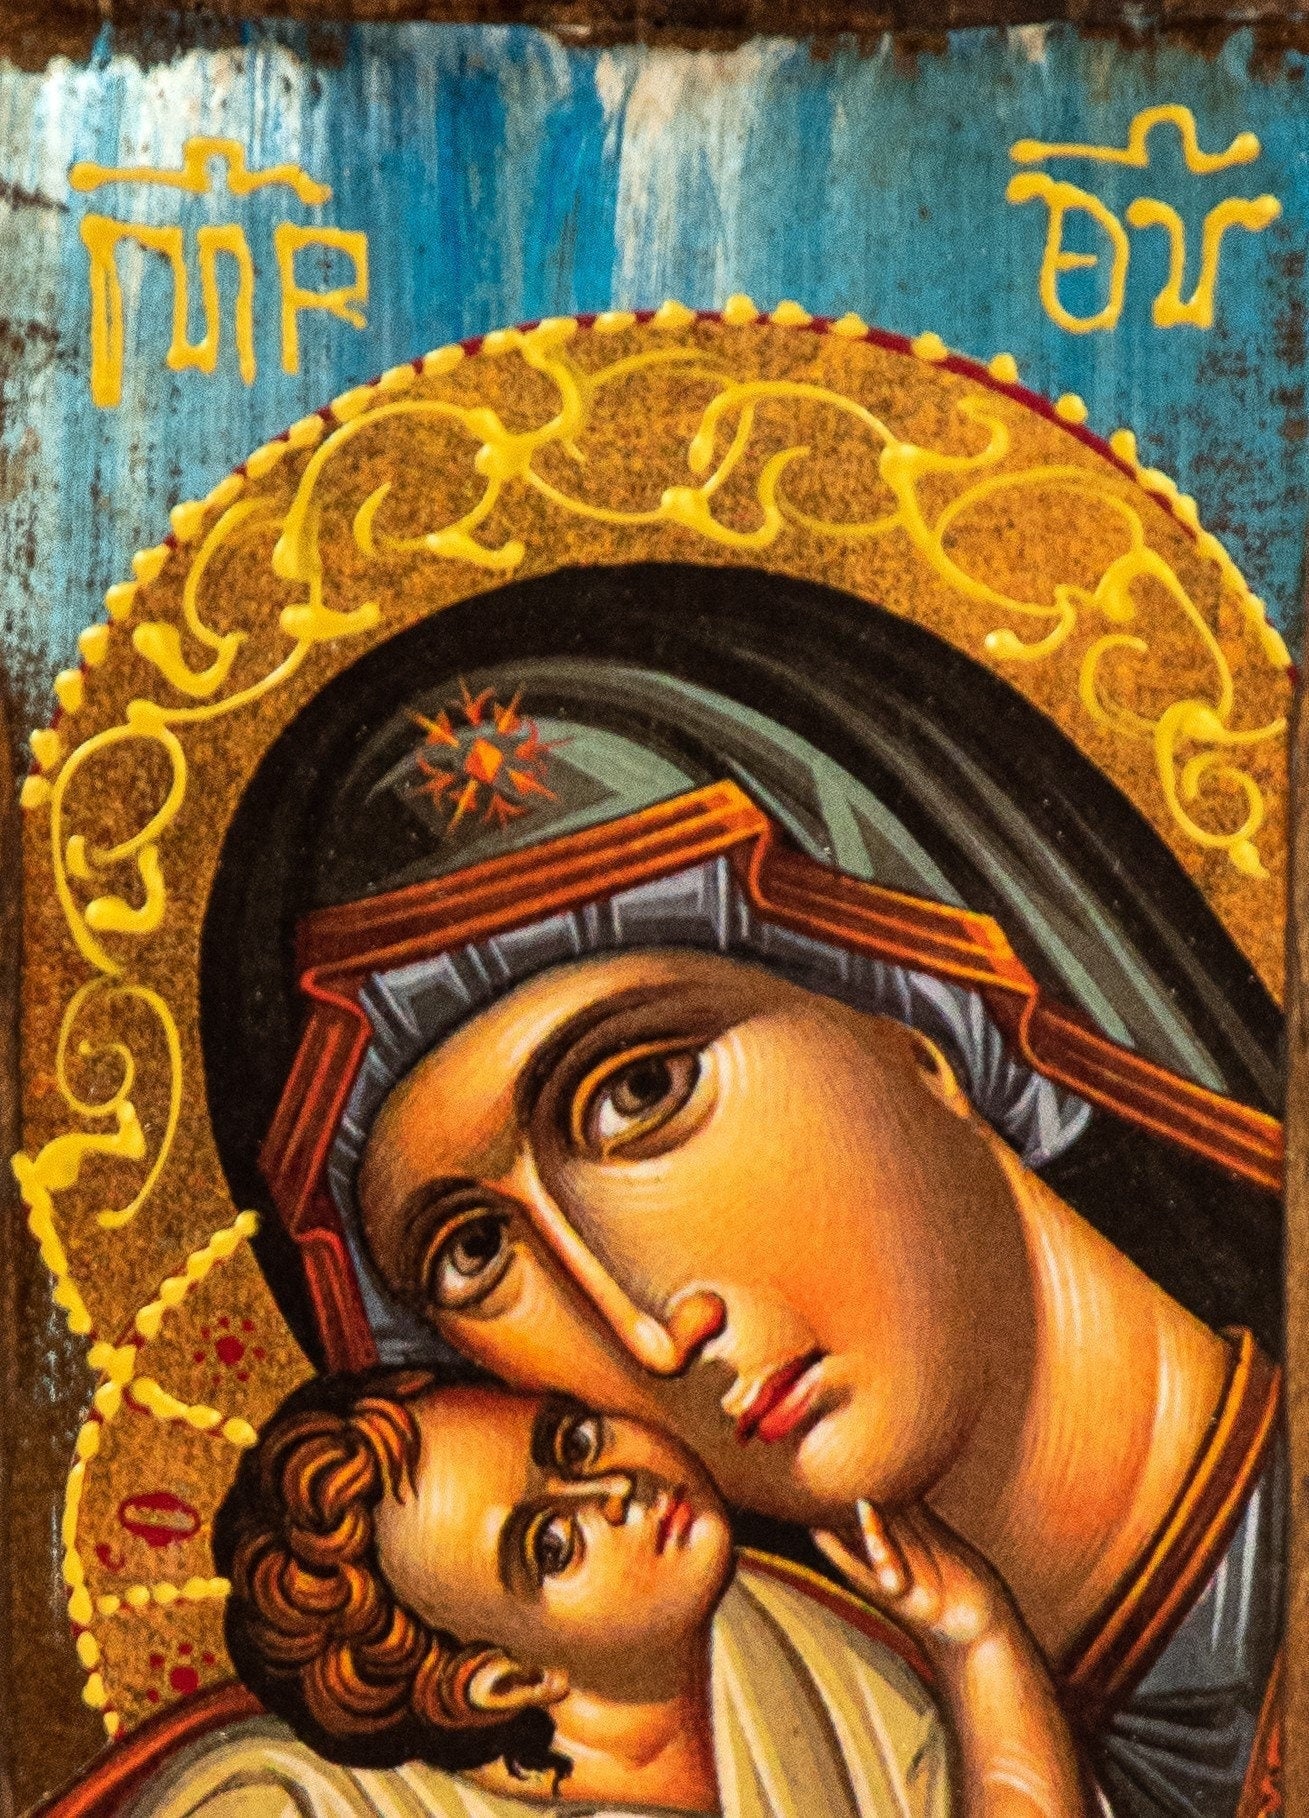 Virgin Mary icon Panagia, Handmade Greek Orthodox icon Theotokos, Mother of God Byzantine art wall hanging wood plaque, religious decor TheHolyArt